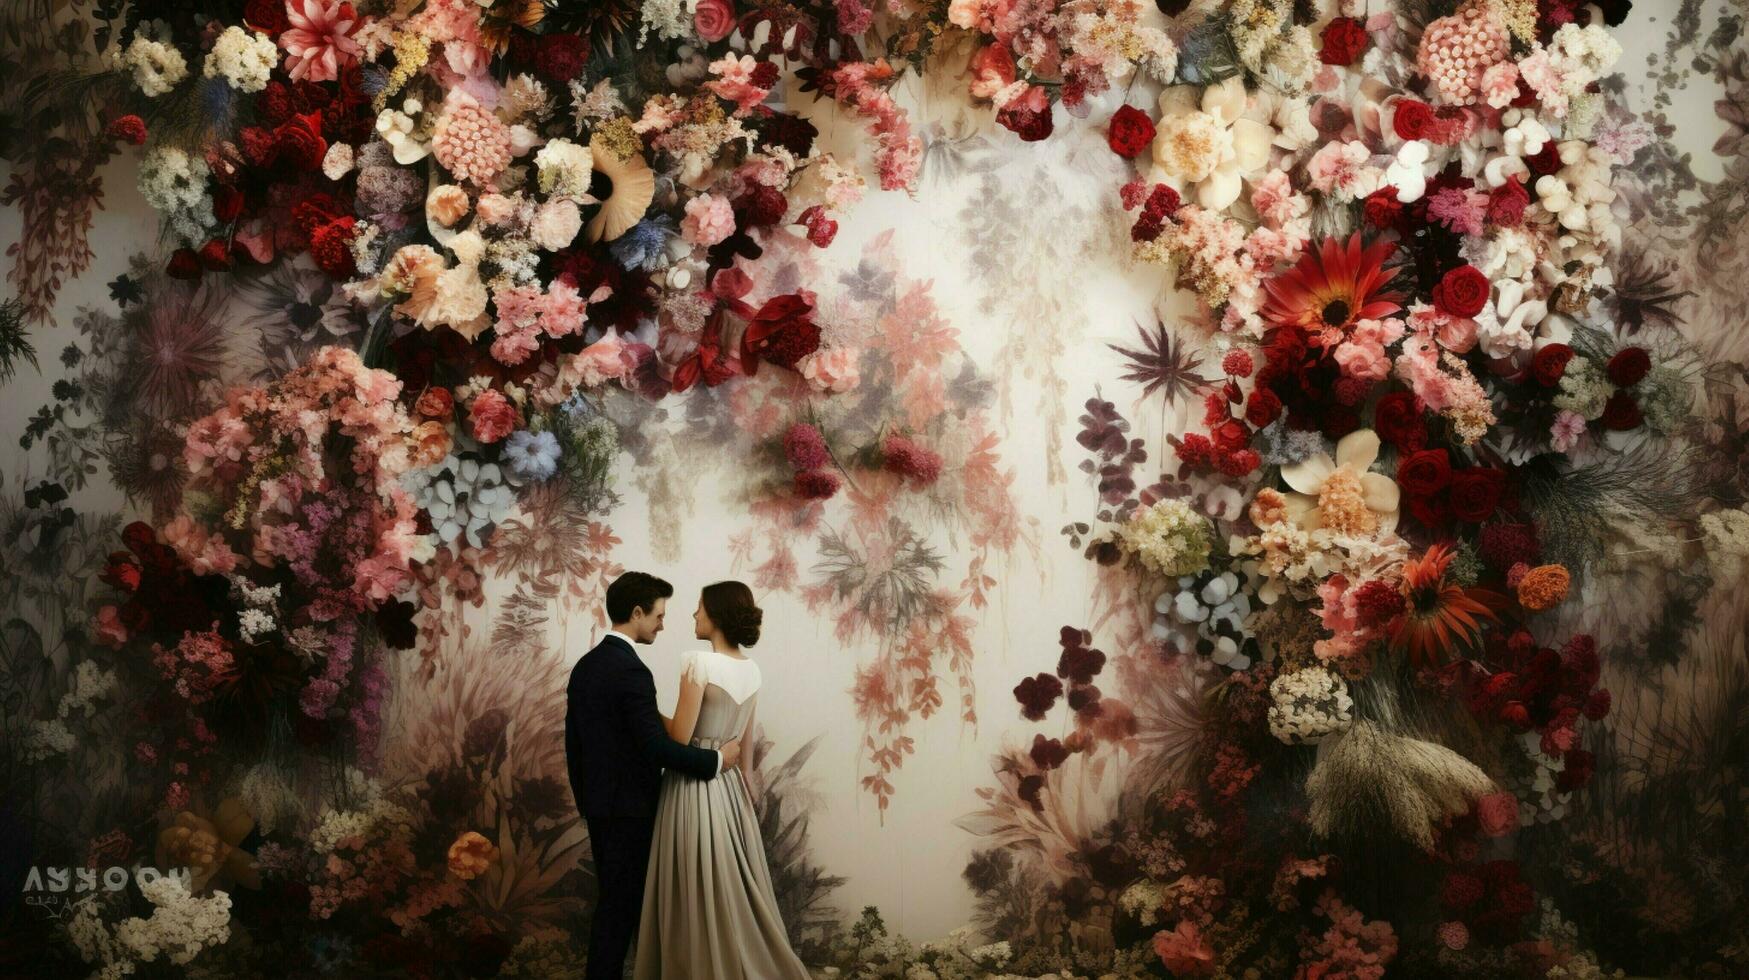 floral patterns depict a modern wedding celebration photo